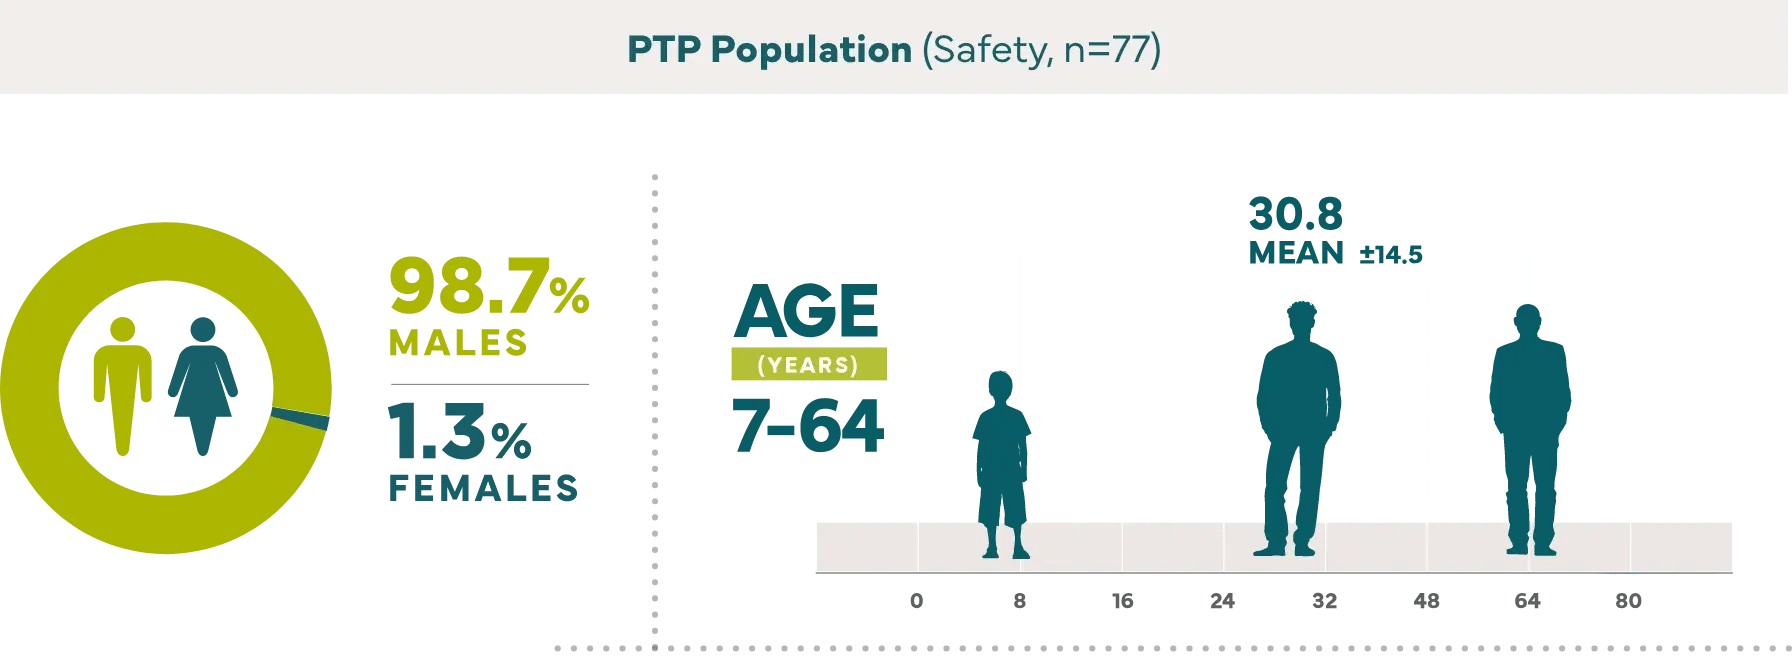 ptp-population